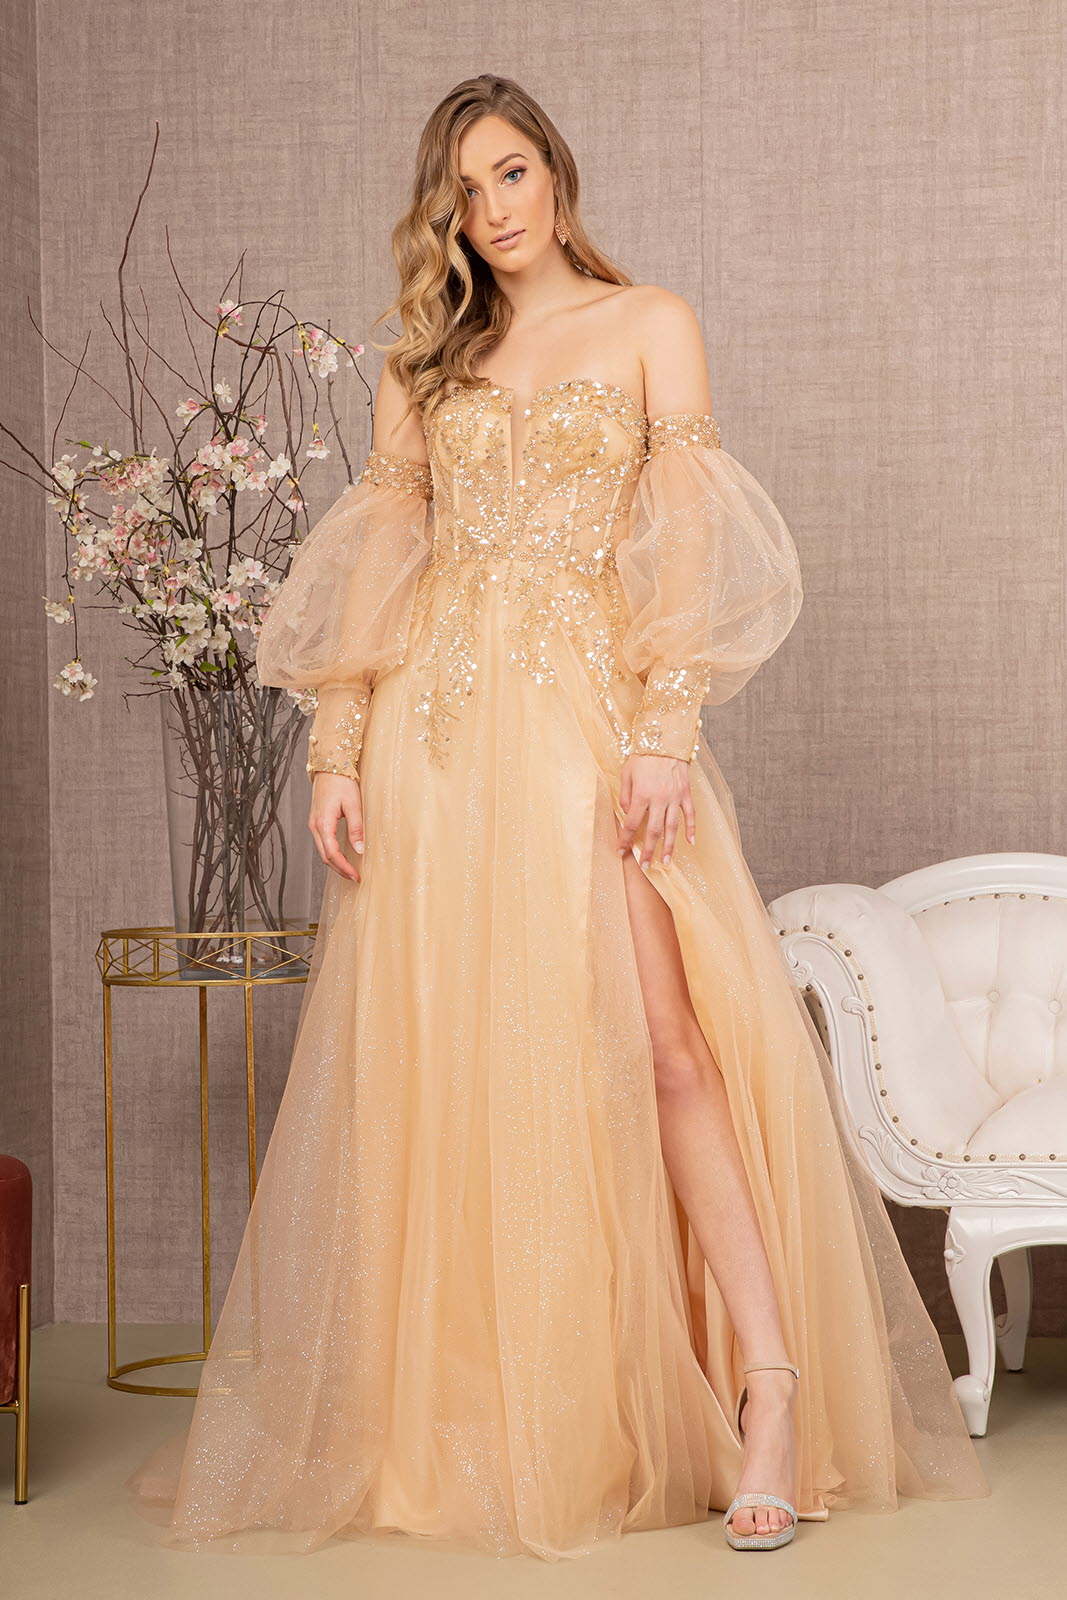 Sequin Glitter Sheer Bodice Illusion Sweetheart A-line Mesh Dress GLGL3118-PROM-smcfashion.com